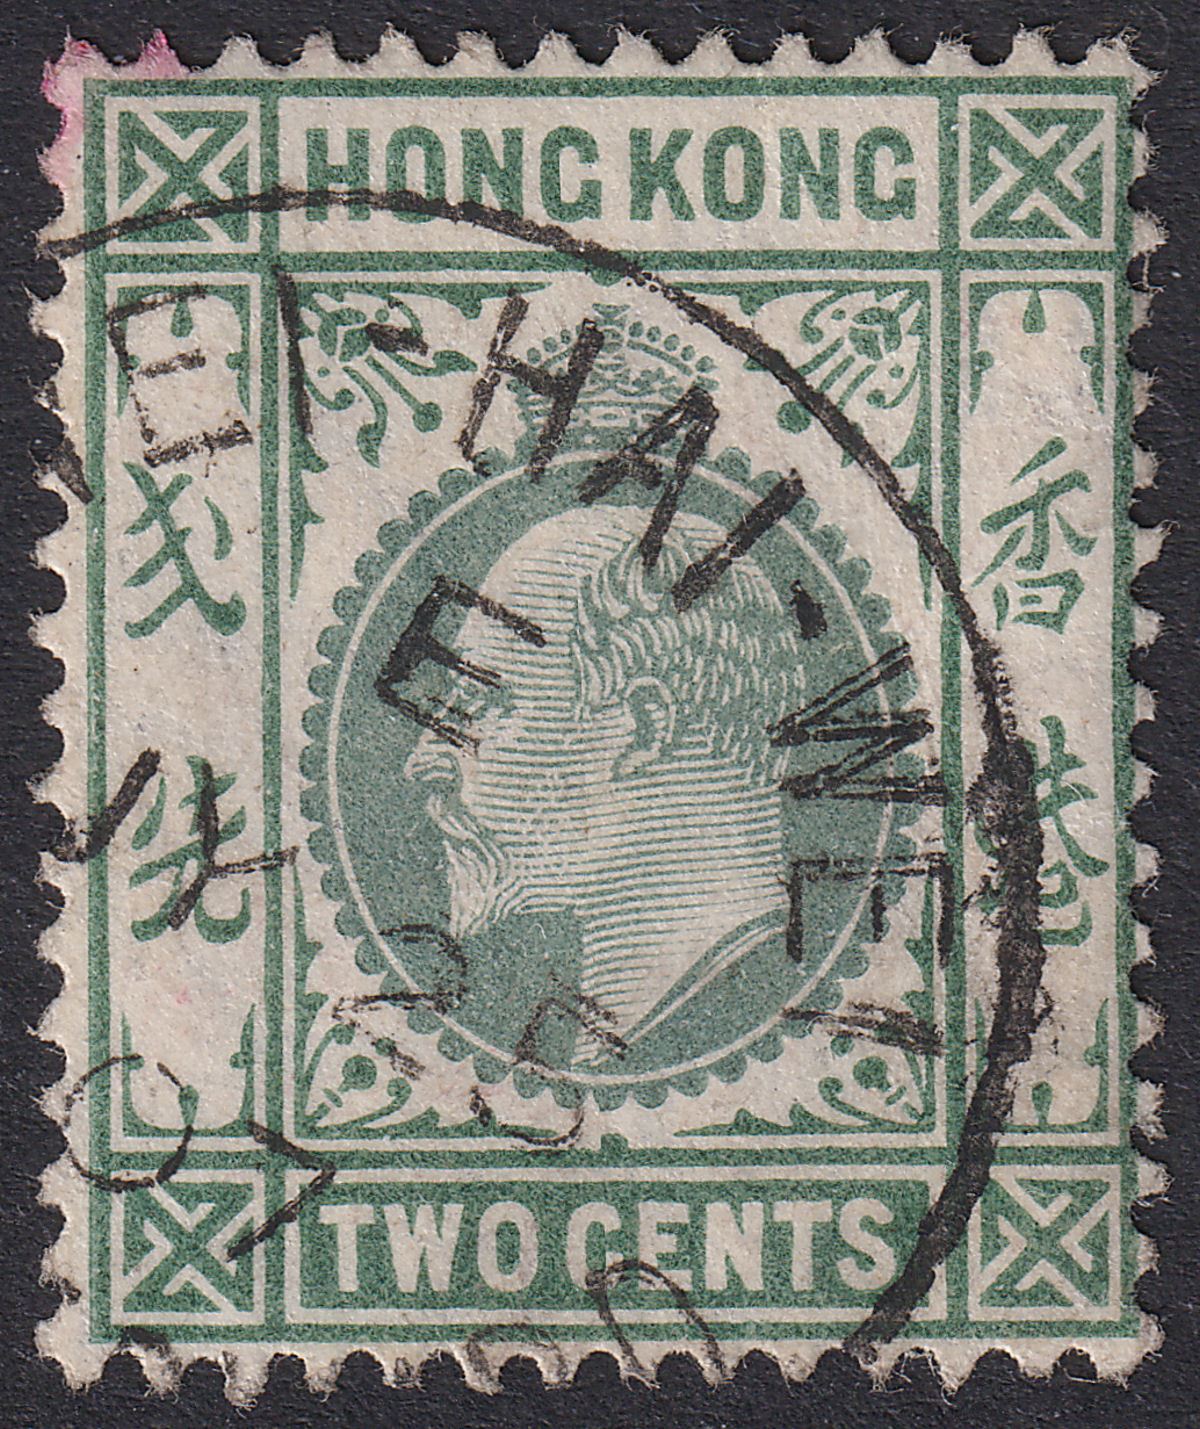 Hong Kong 1907 KEVII 2c Used WEI-HAI-WEI / PORT EDWARD Postmark China SG Z1141